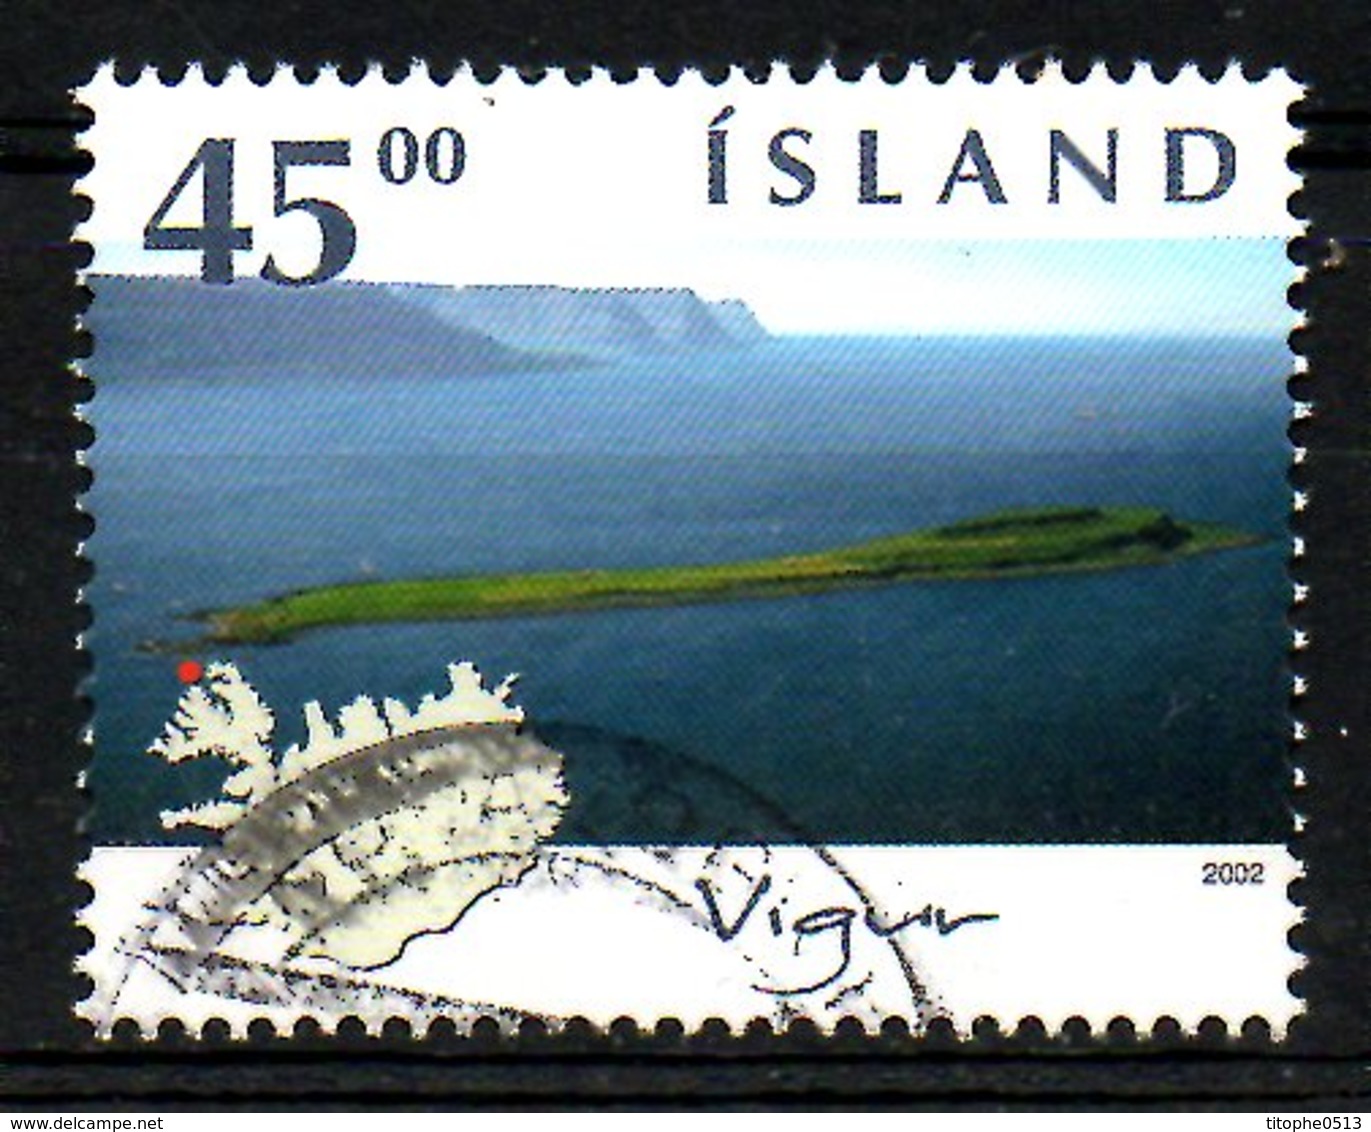 ISLANDE. N°947 Oblitéré De 2002. Vigur. - Used Stamps